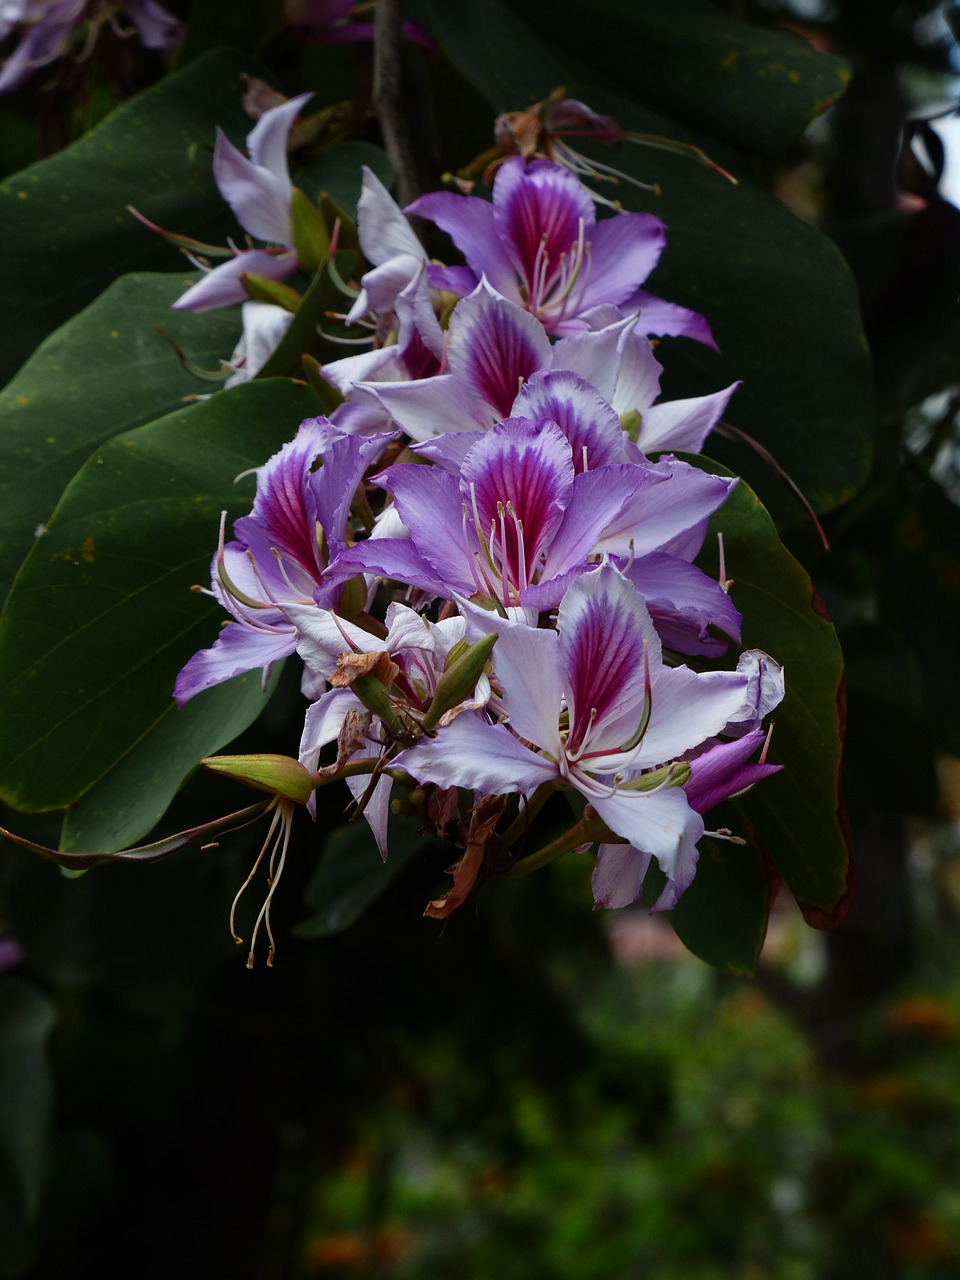 bauhinie flowers inflorescence free photo